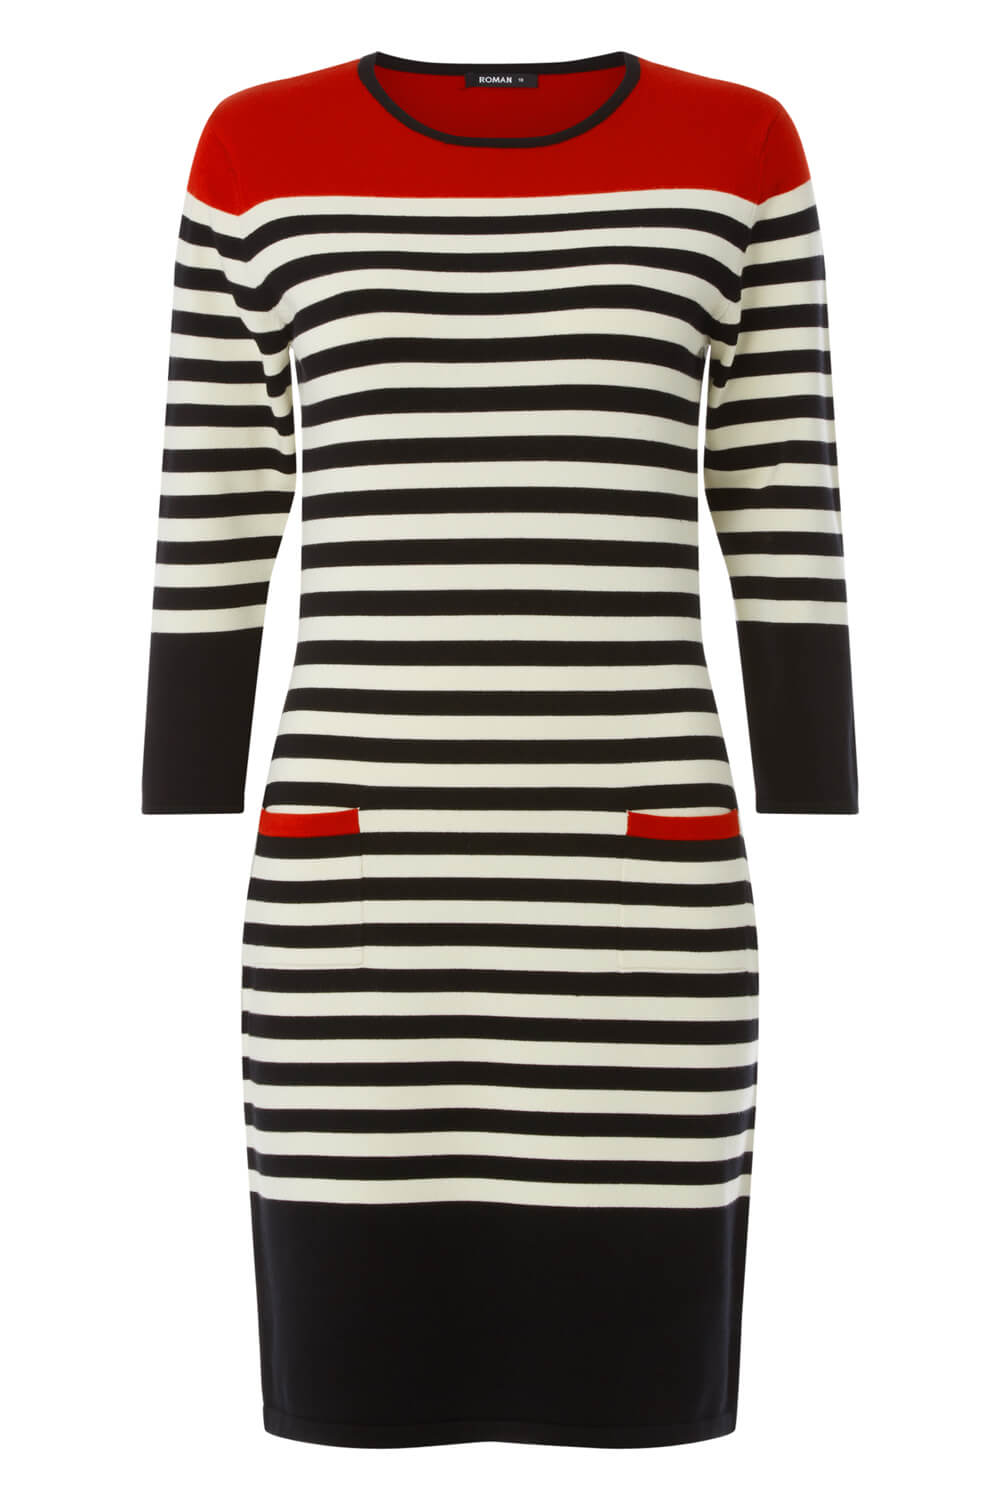 Red Stripe Pocket Knitted Shift Dress, Image 5 of 5